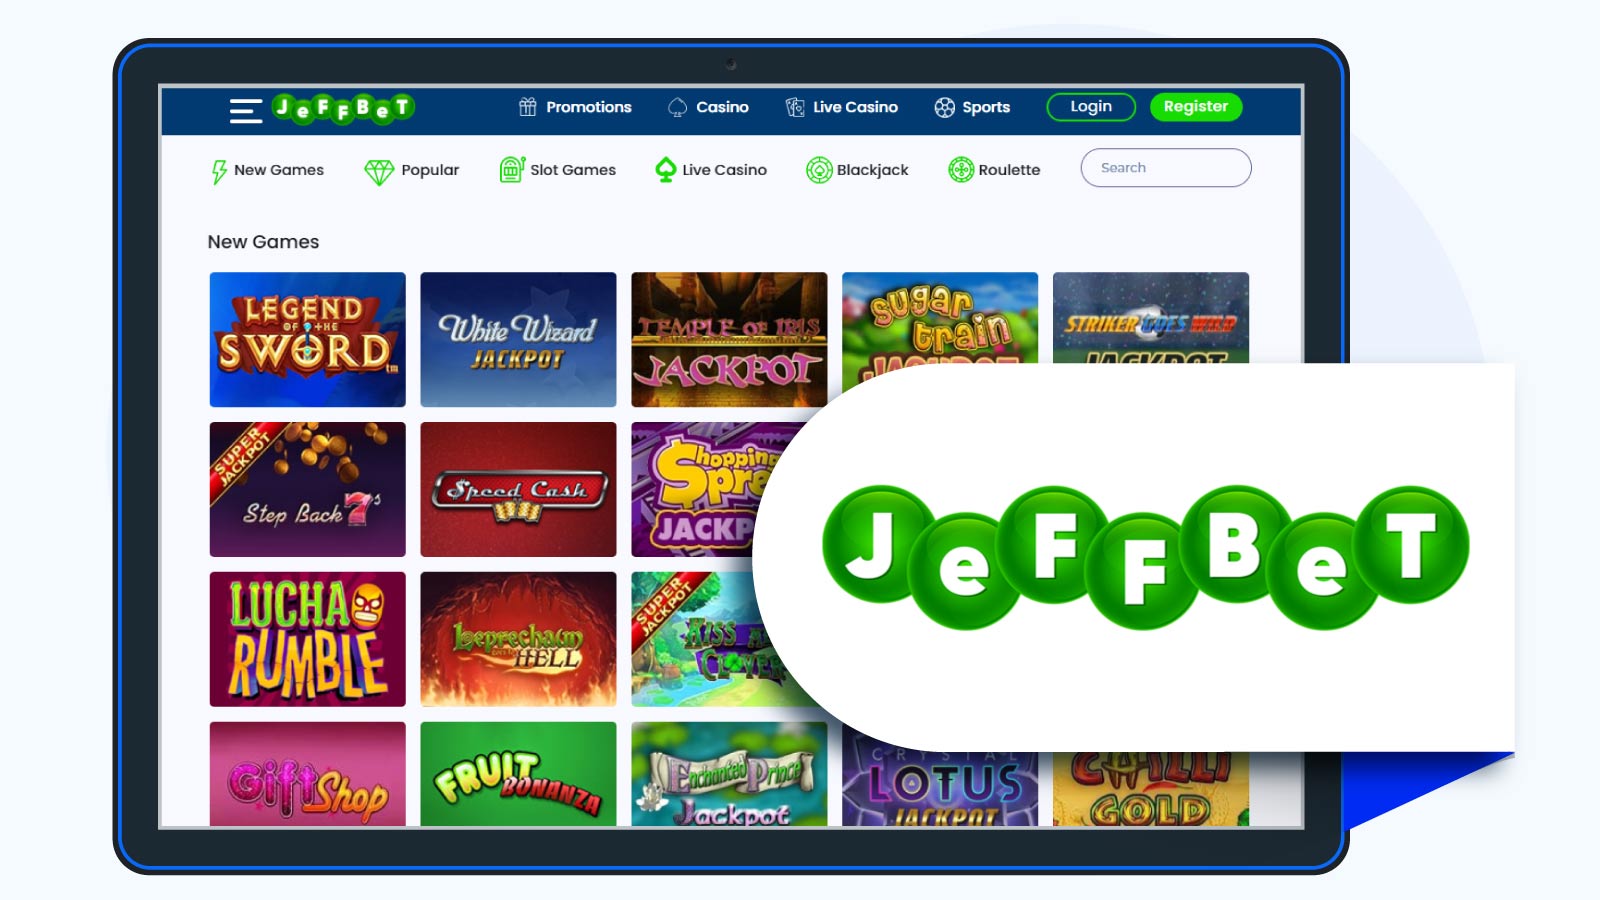 JeffBet – CasinoAlpha’s Editor’s Choice for Best New Online Casino UK